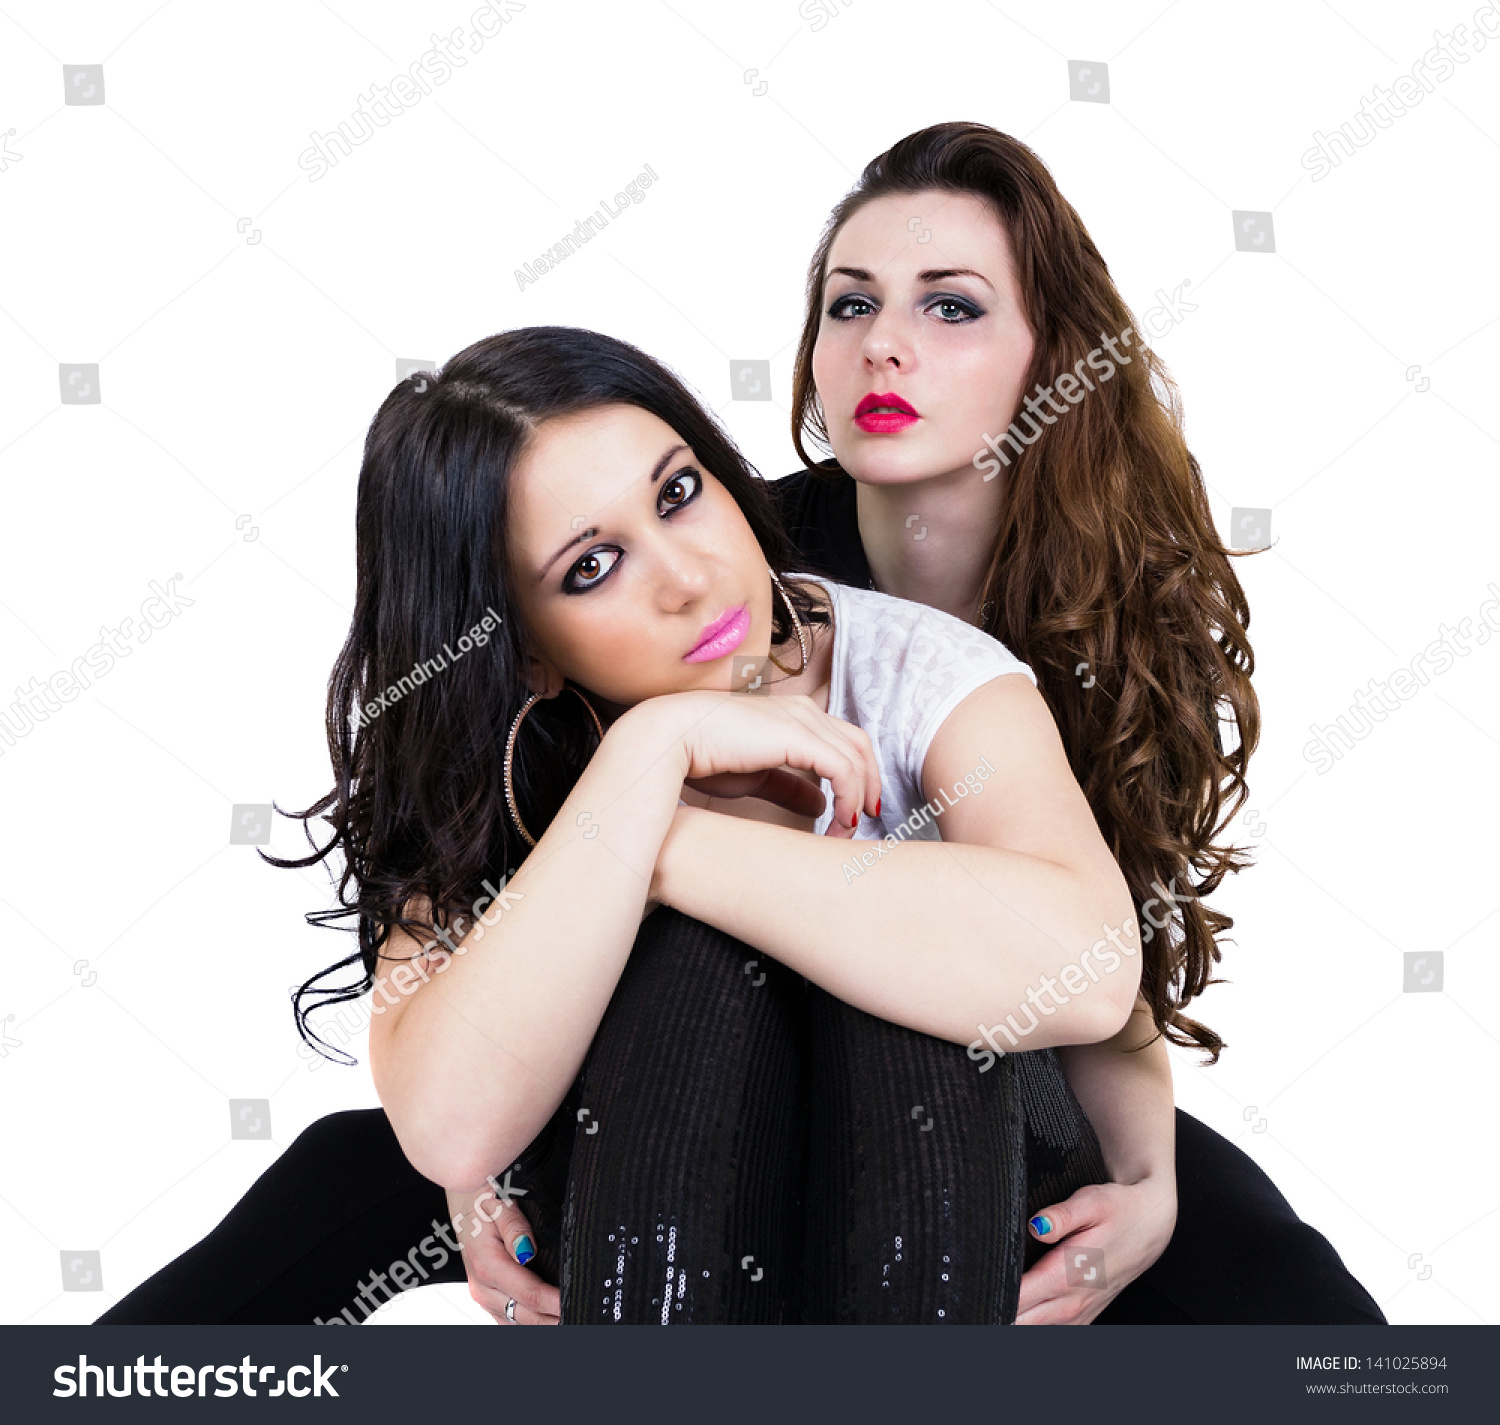 Lesbian Girls Touching Each Other